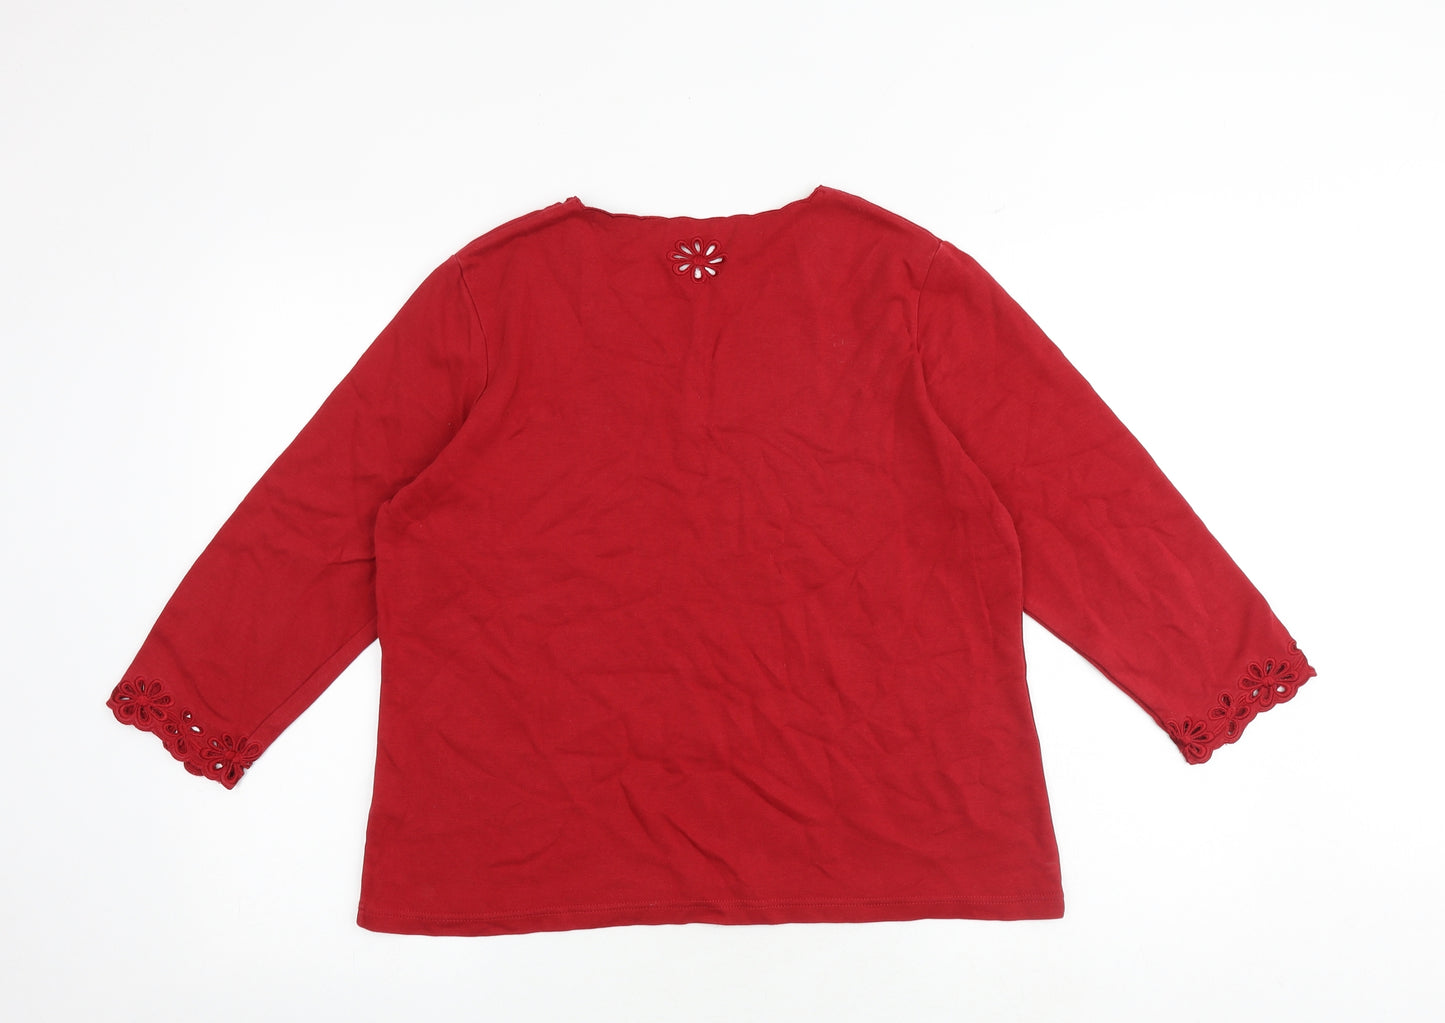 DASH Womens Red Cotton Basic Blouse Size 16 V-Neck